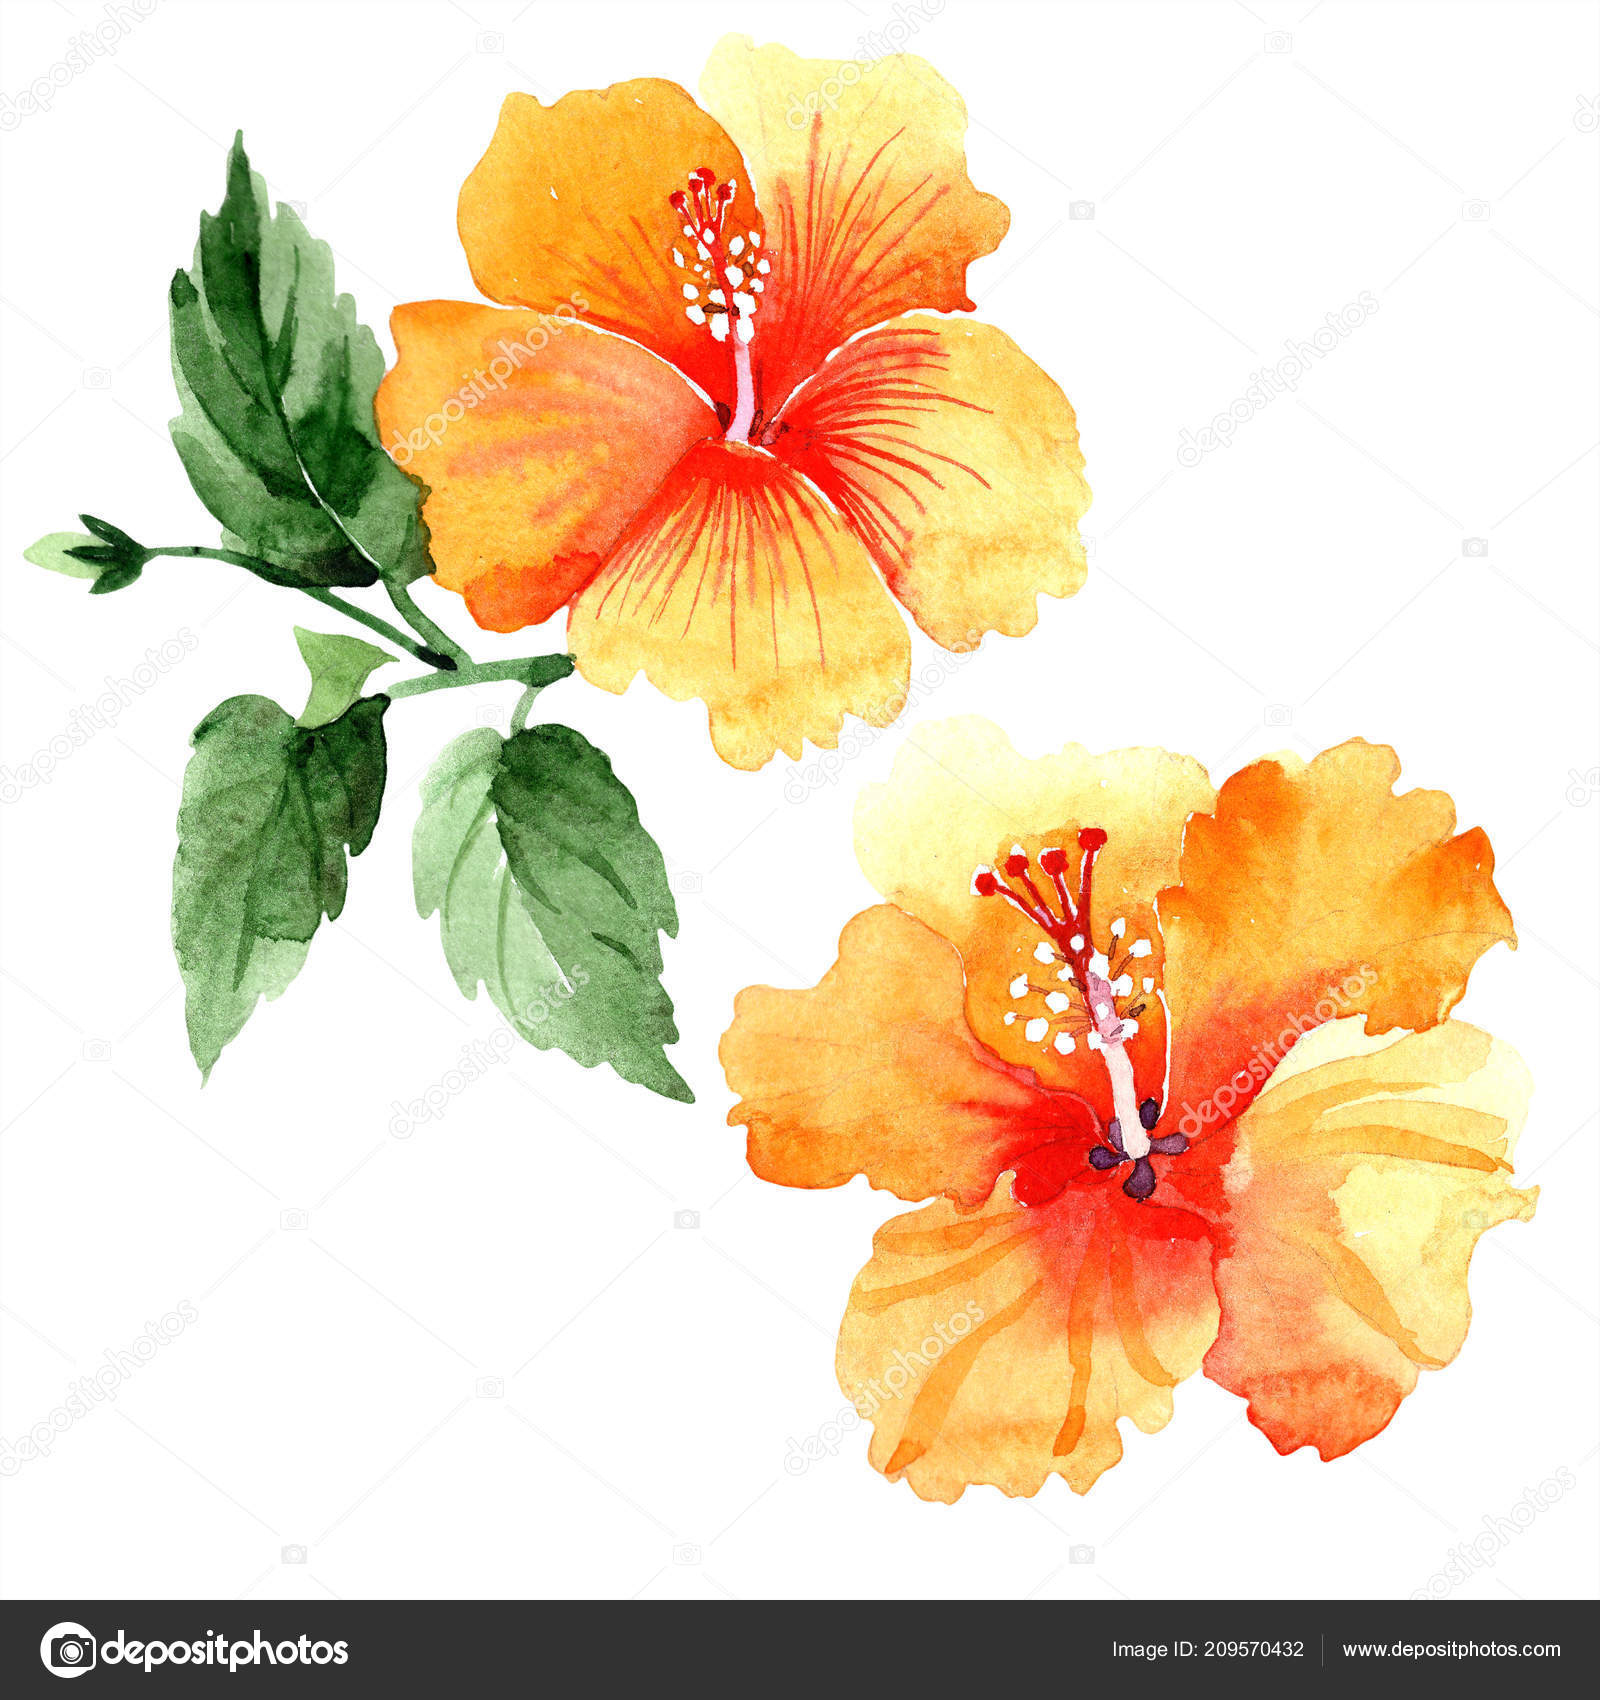 Watercolor Orange Naranja Hibiscus Flowers Floral Botanical Flower Isolated  Illustration Stock Photo by ©MyStocks 209570432